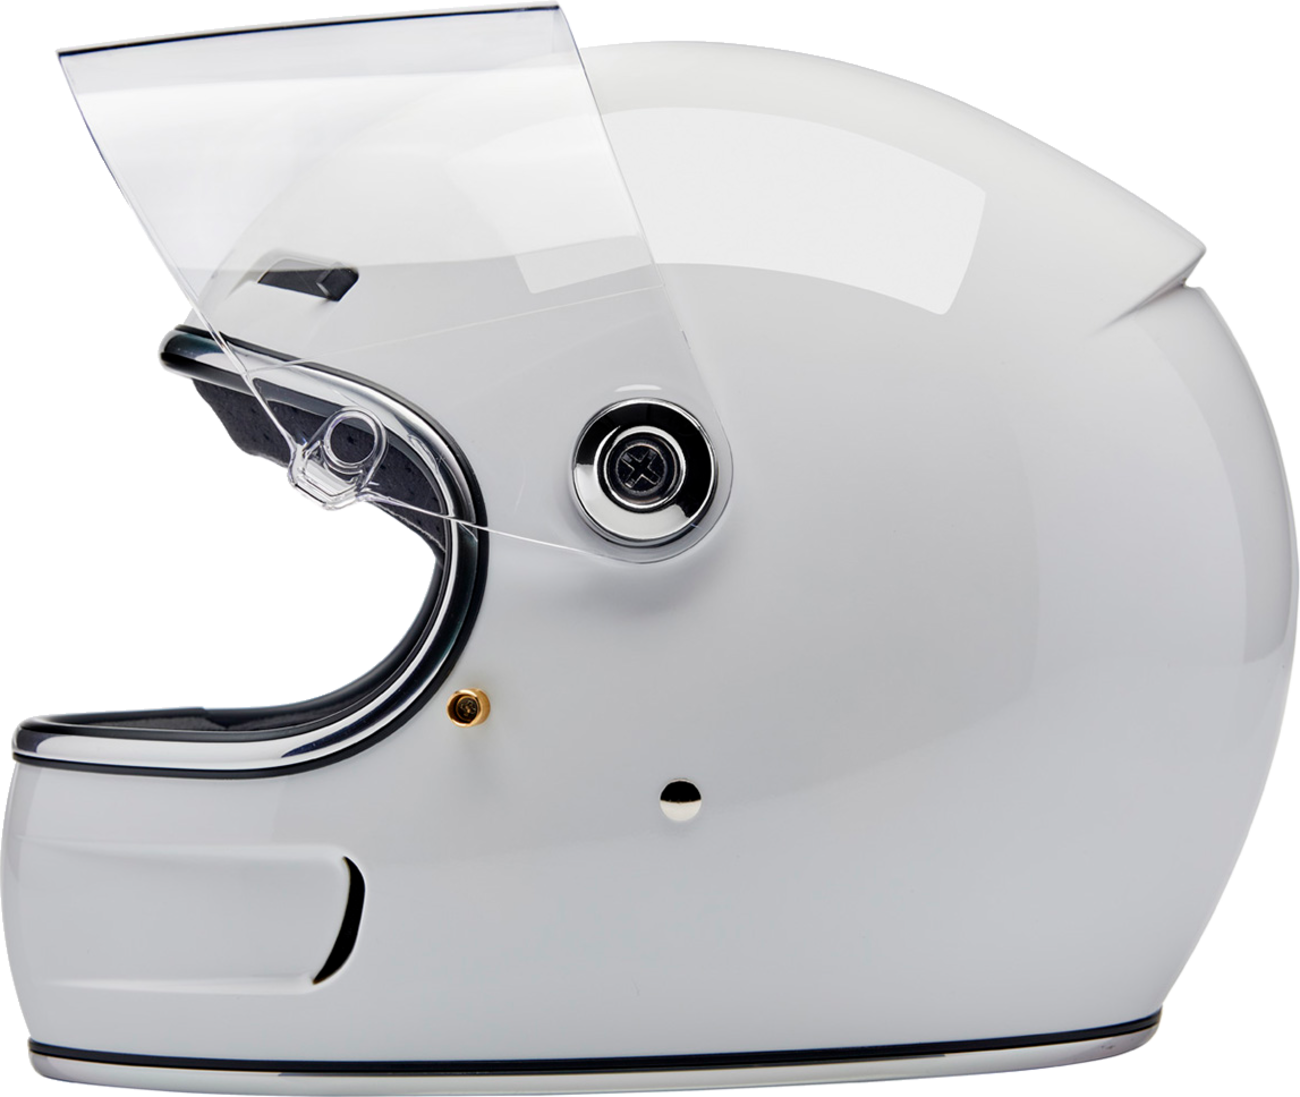 BILTWELL Gringo SV Helmet - Gloss White - XS 1006-104-501